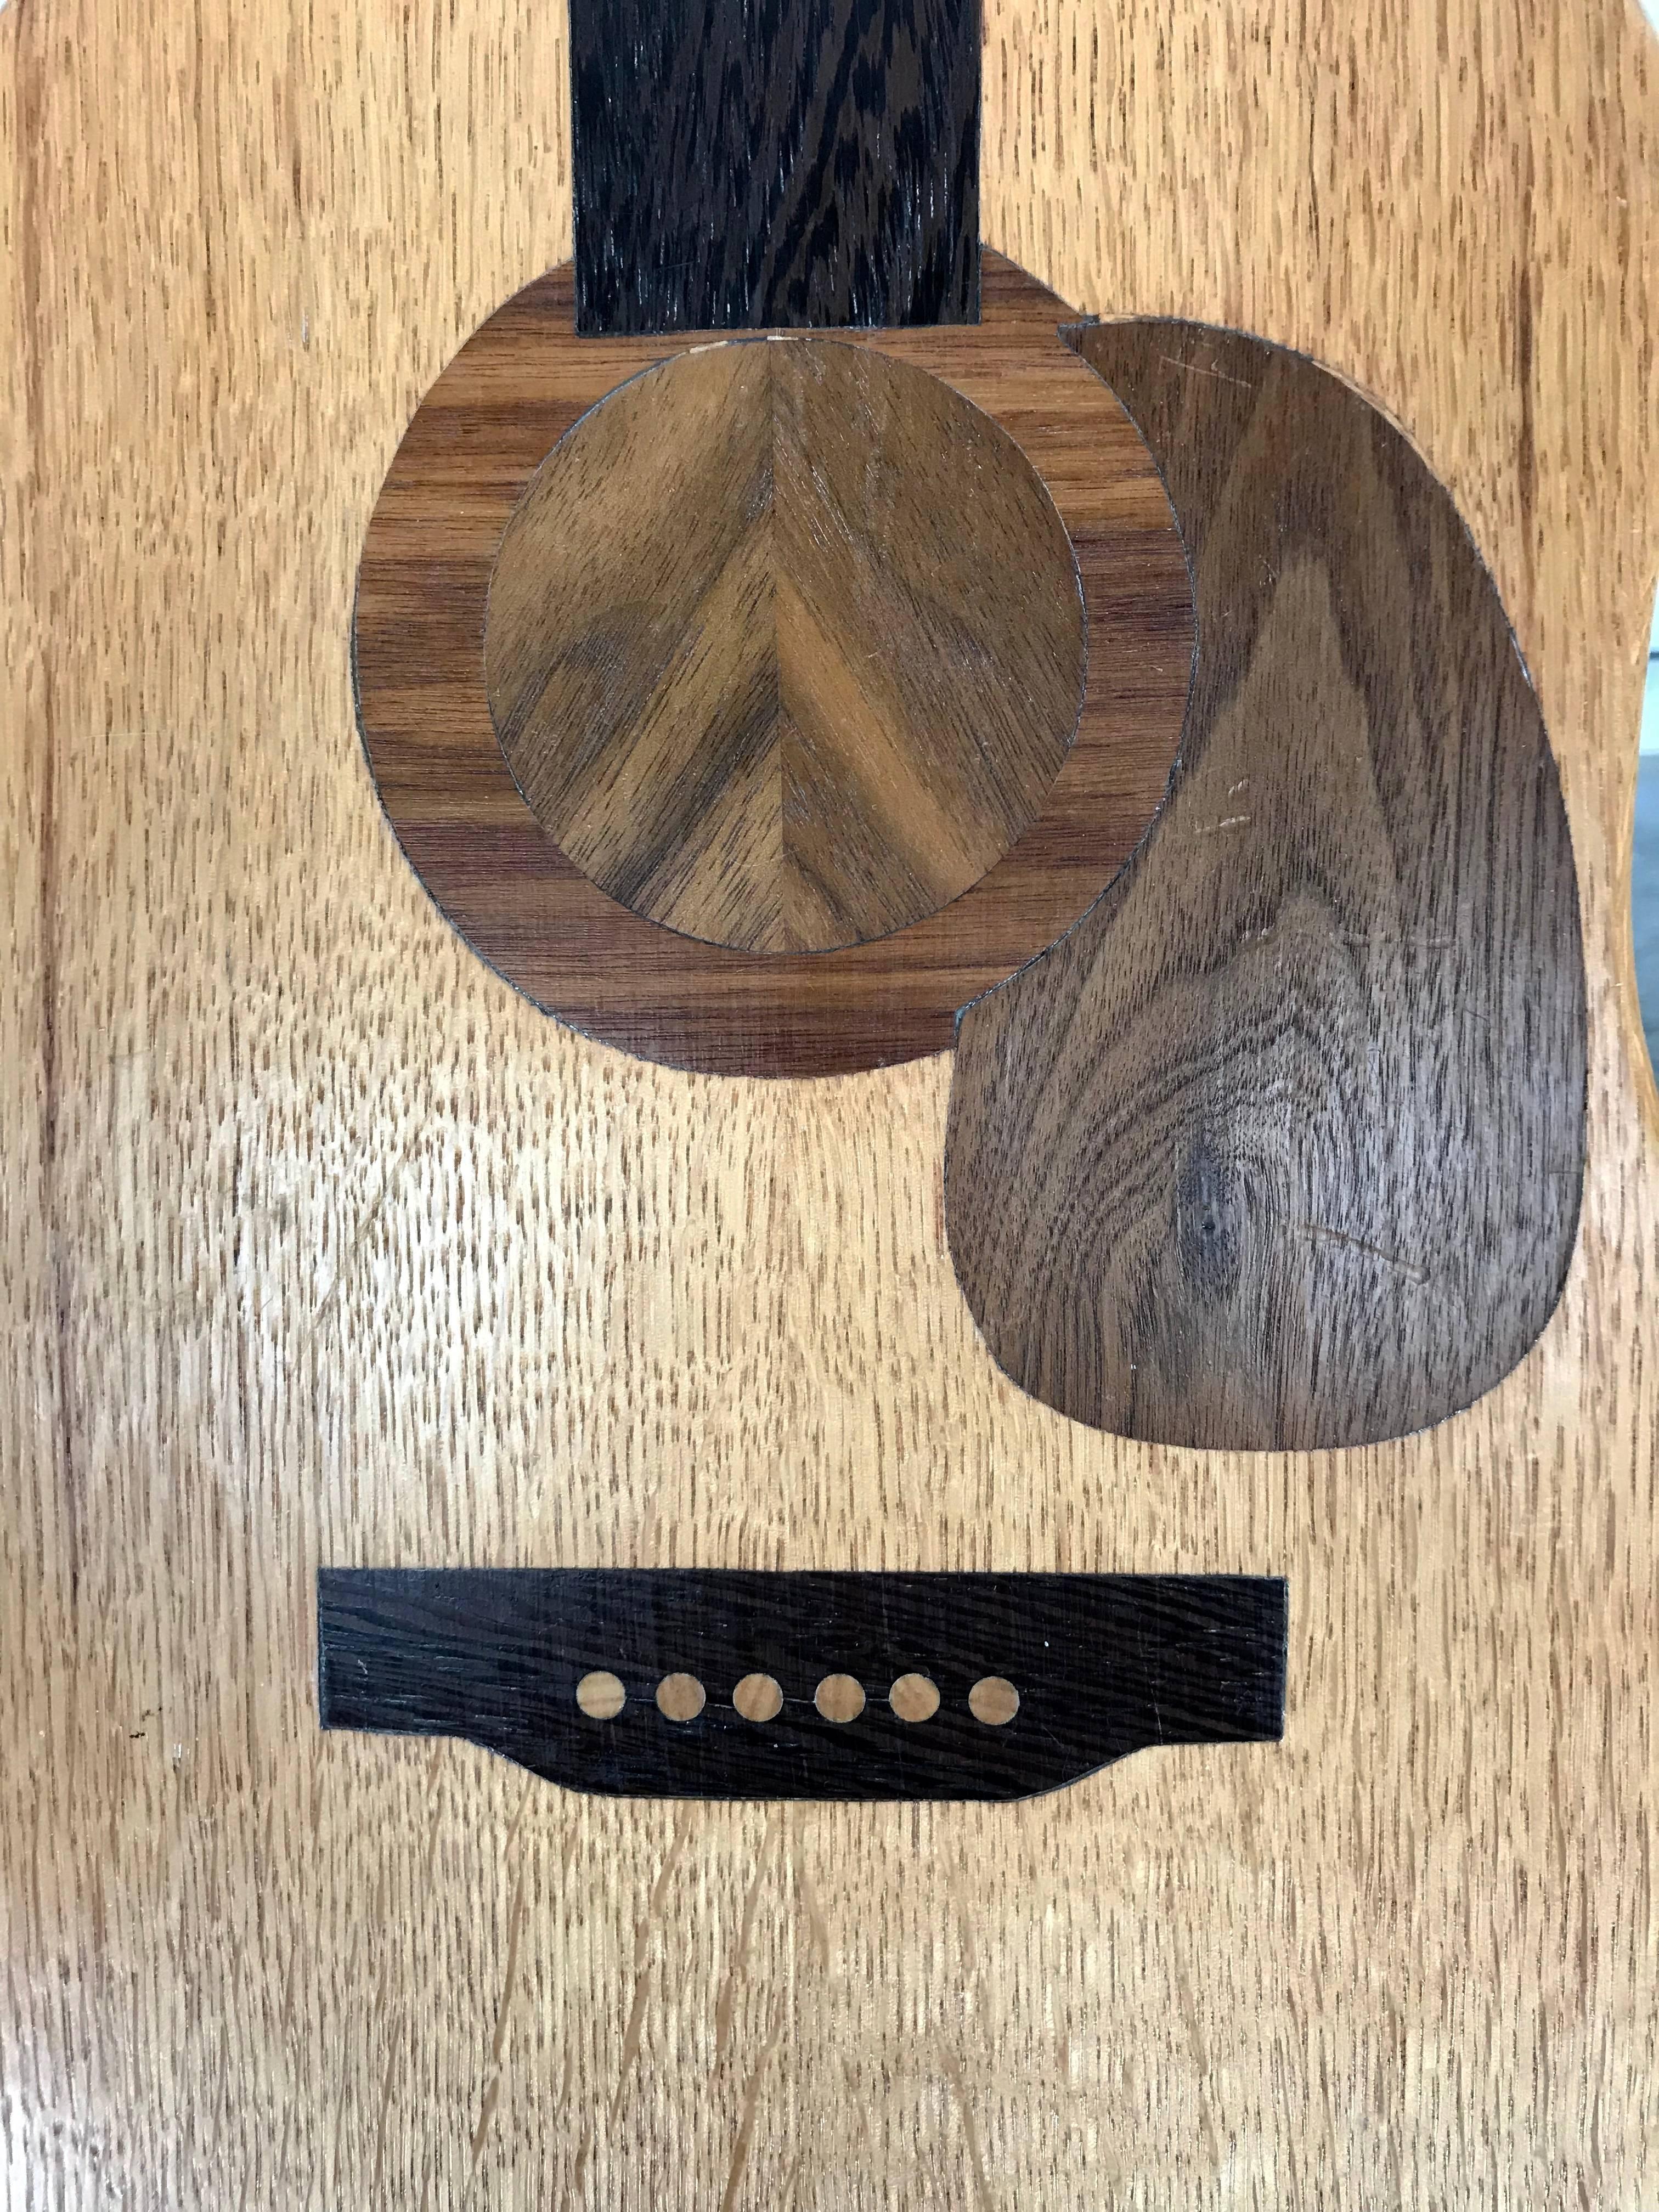 wooden guitar stool